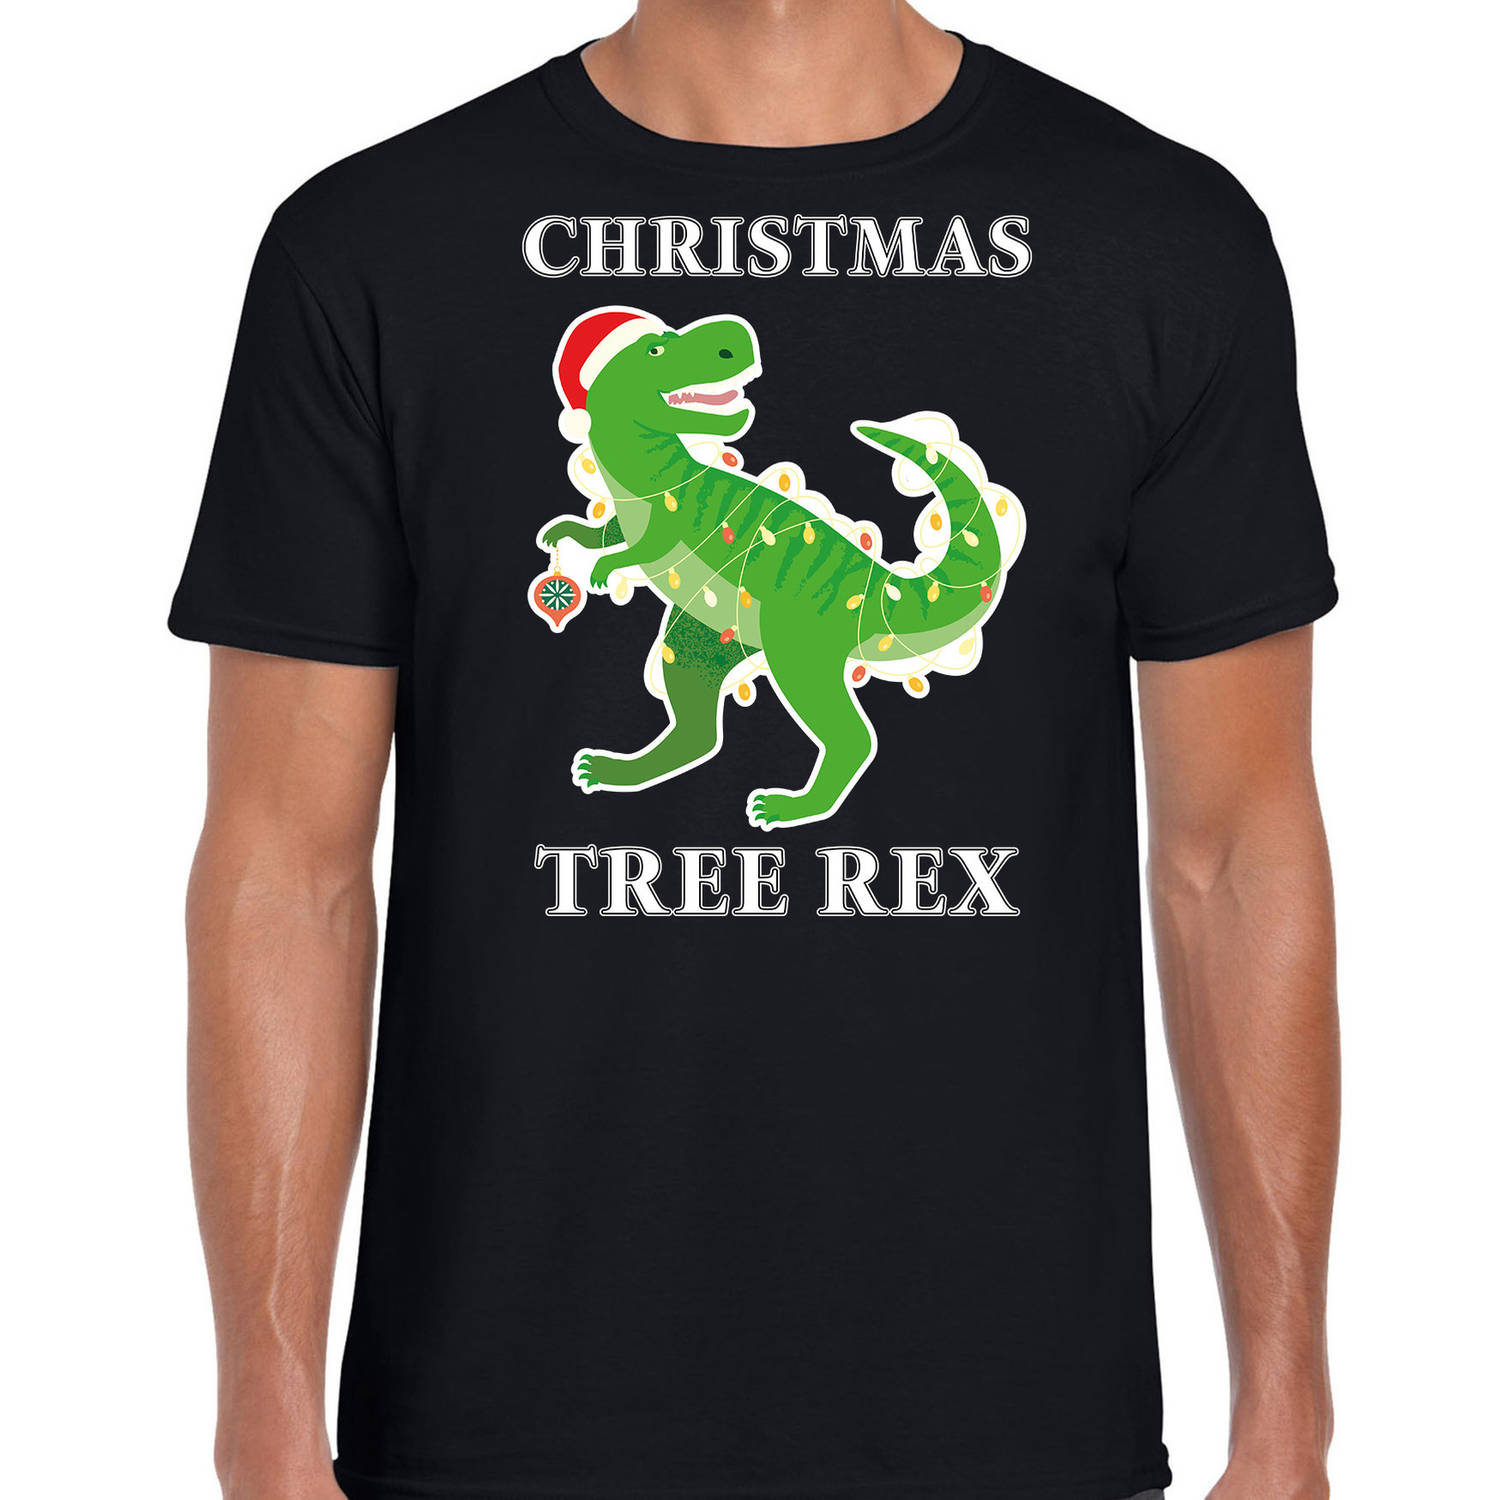 Zwart Kerst shirt / Kerstkleding Christmas tree rex voor heren L - kerst t-shirts